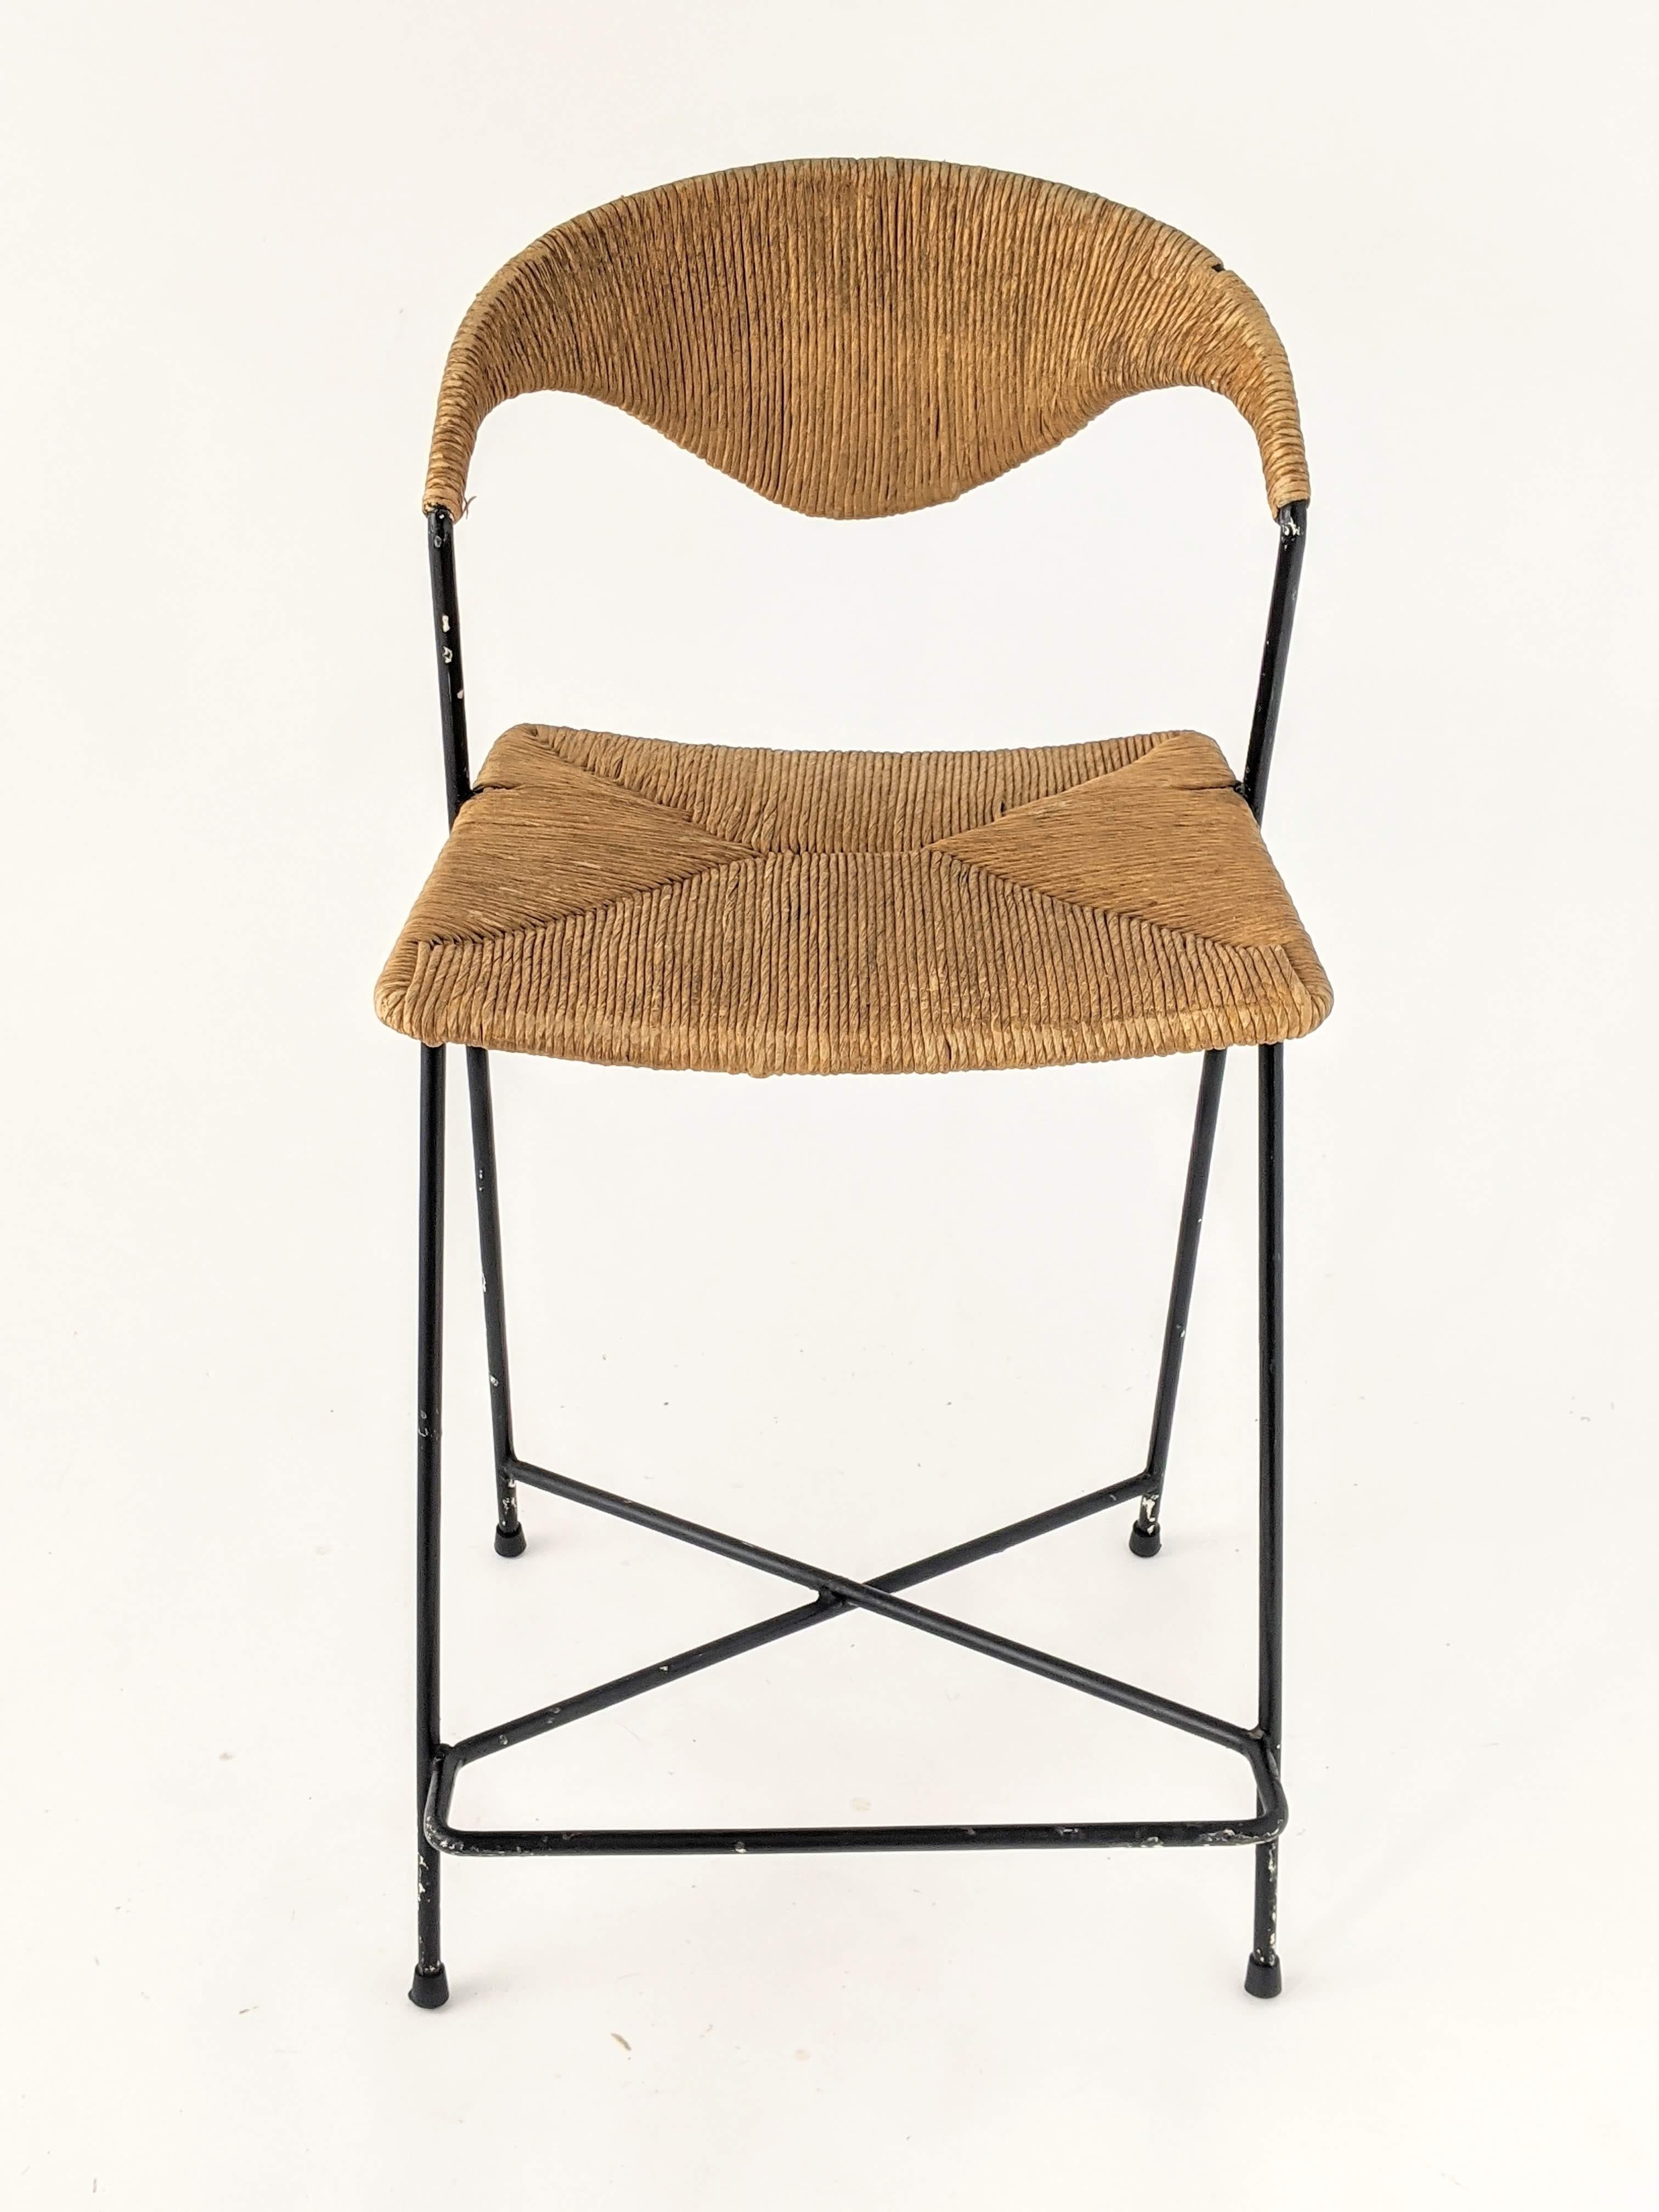 American 1950s Arthur Umanoff Wicker & Steel Rod High Chair, USA For Sale